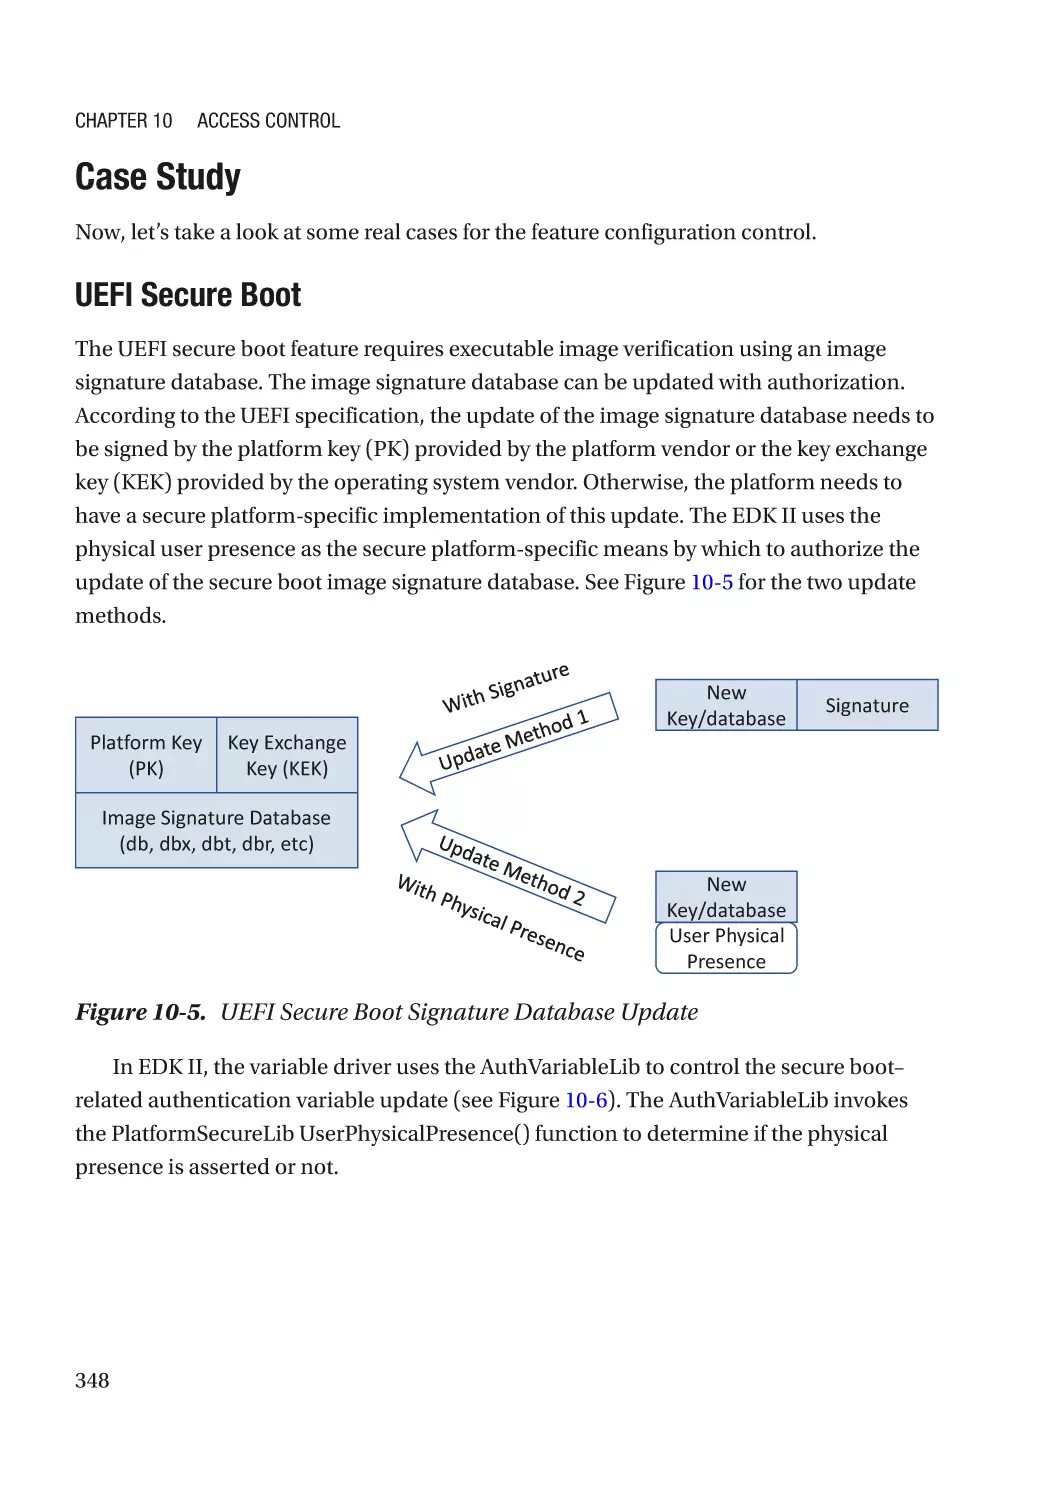 Case Study
UEFI Secure Boot